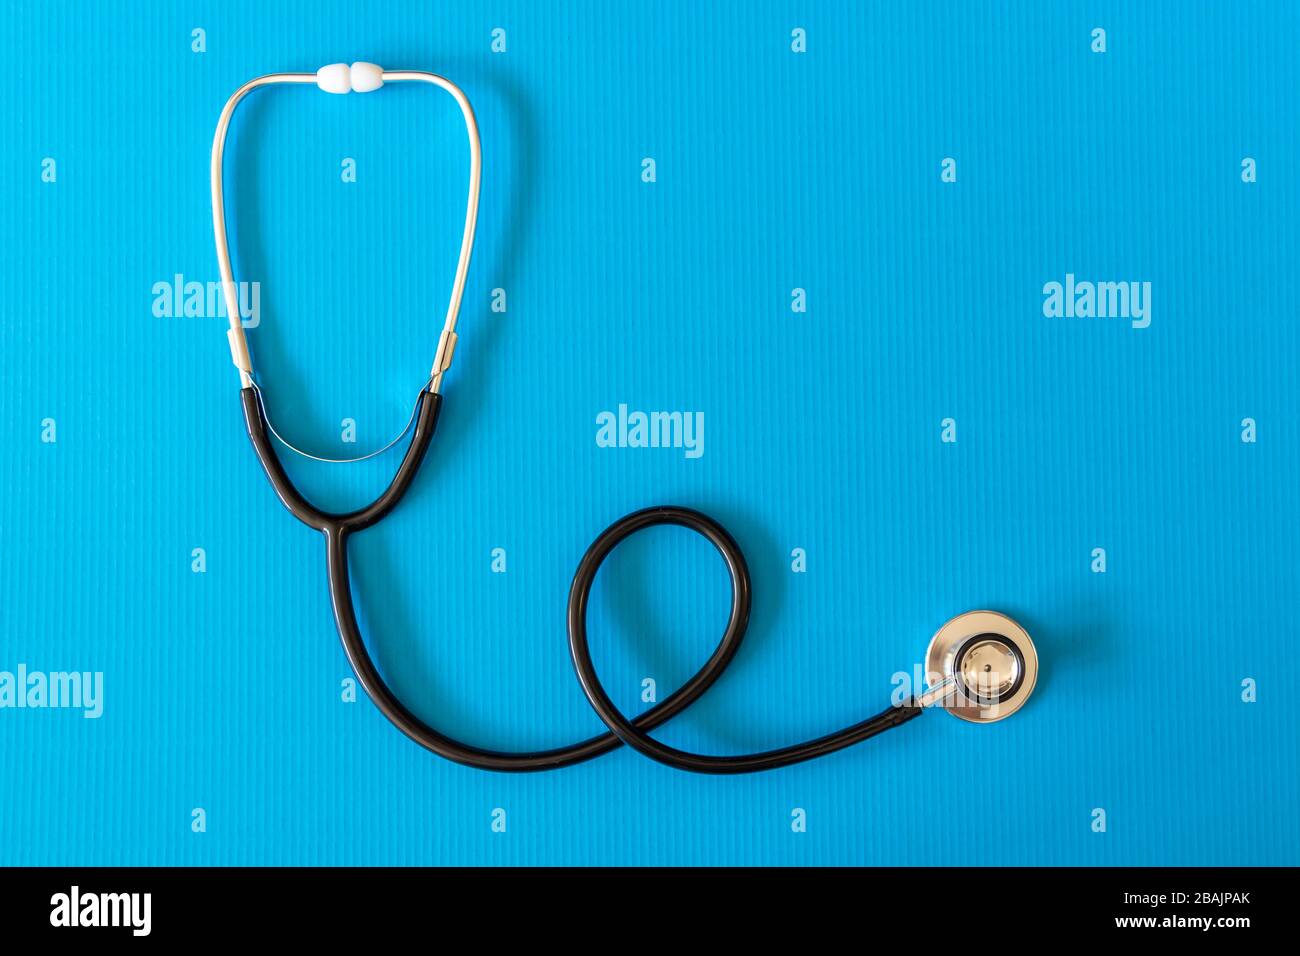 Black Stethoscope on blue background. Medical concept. Stock Photo